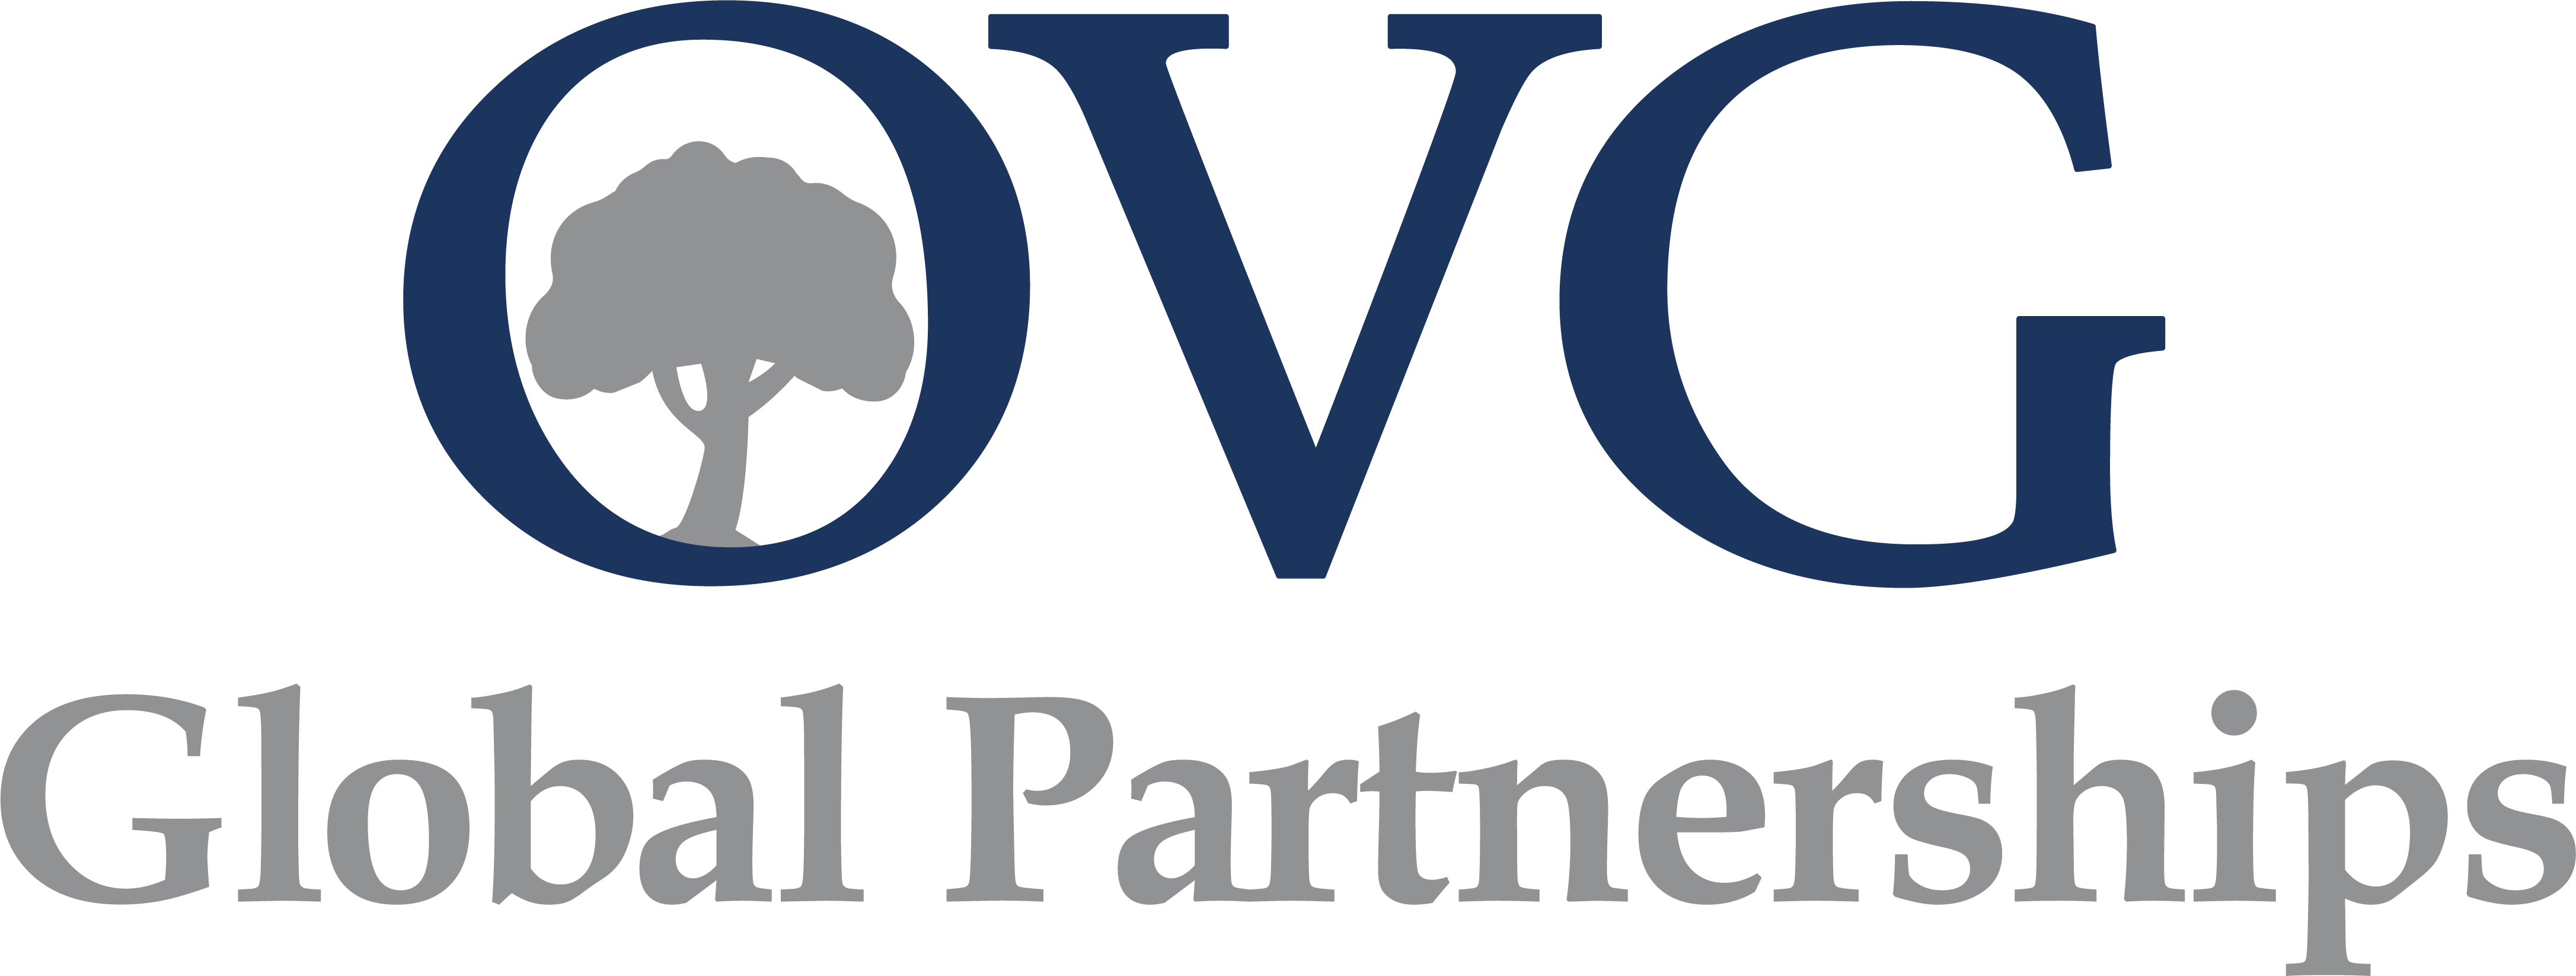 OVG Global Partnerships